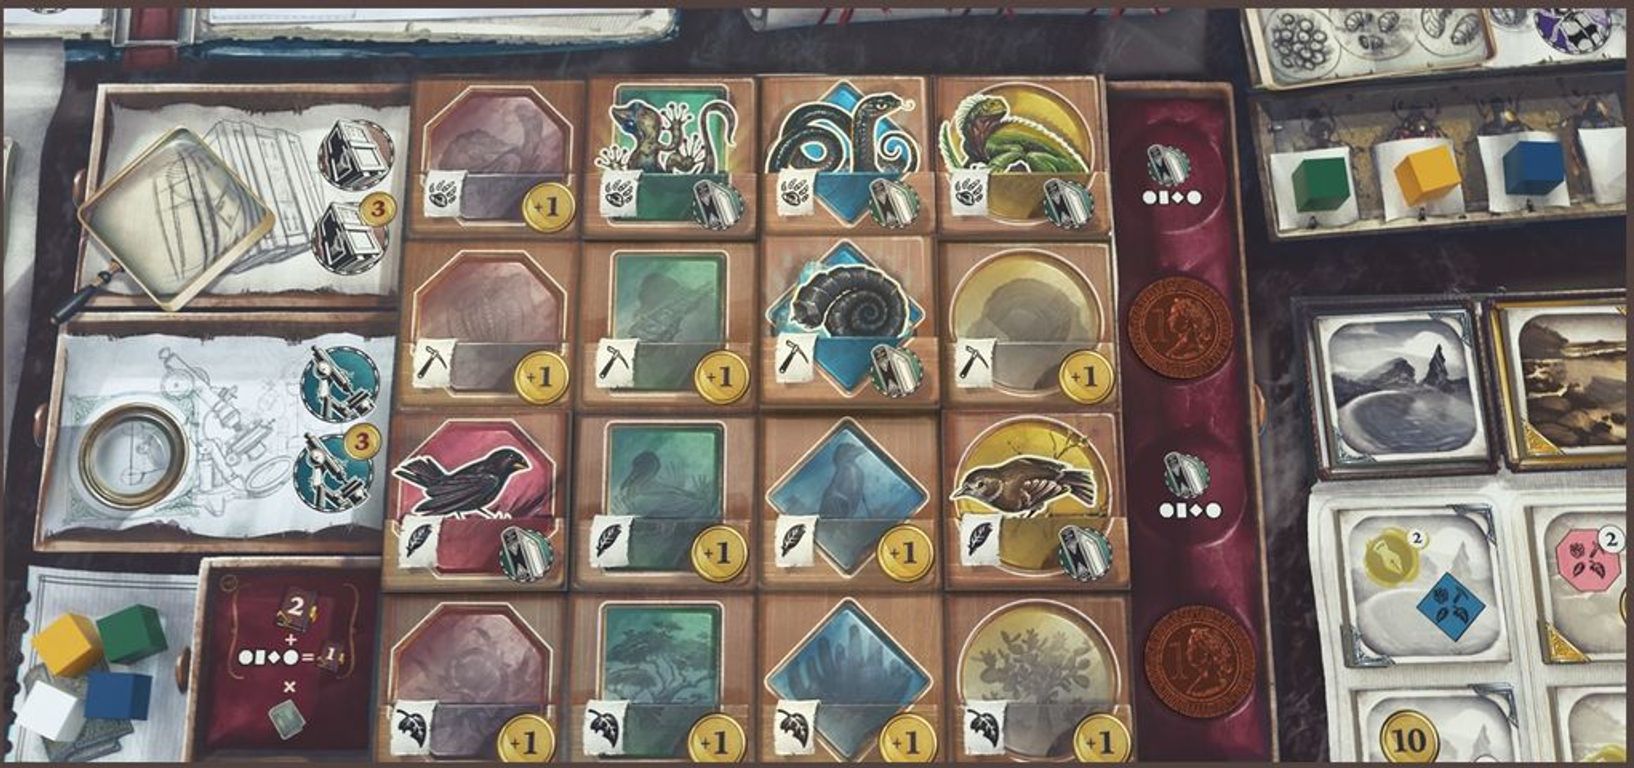 Darwin's Journey game board